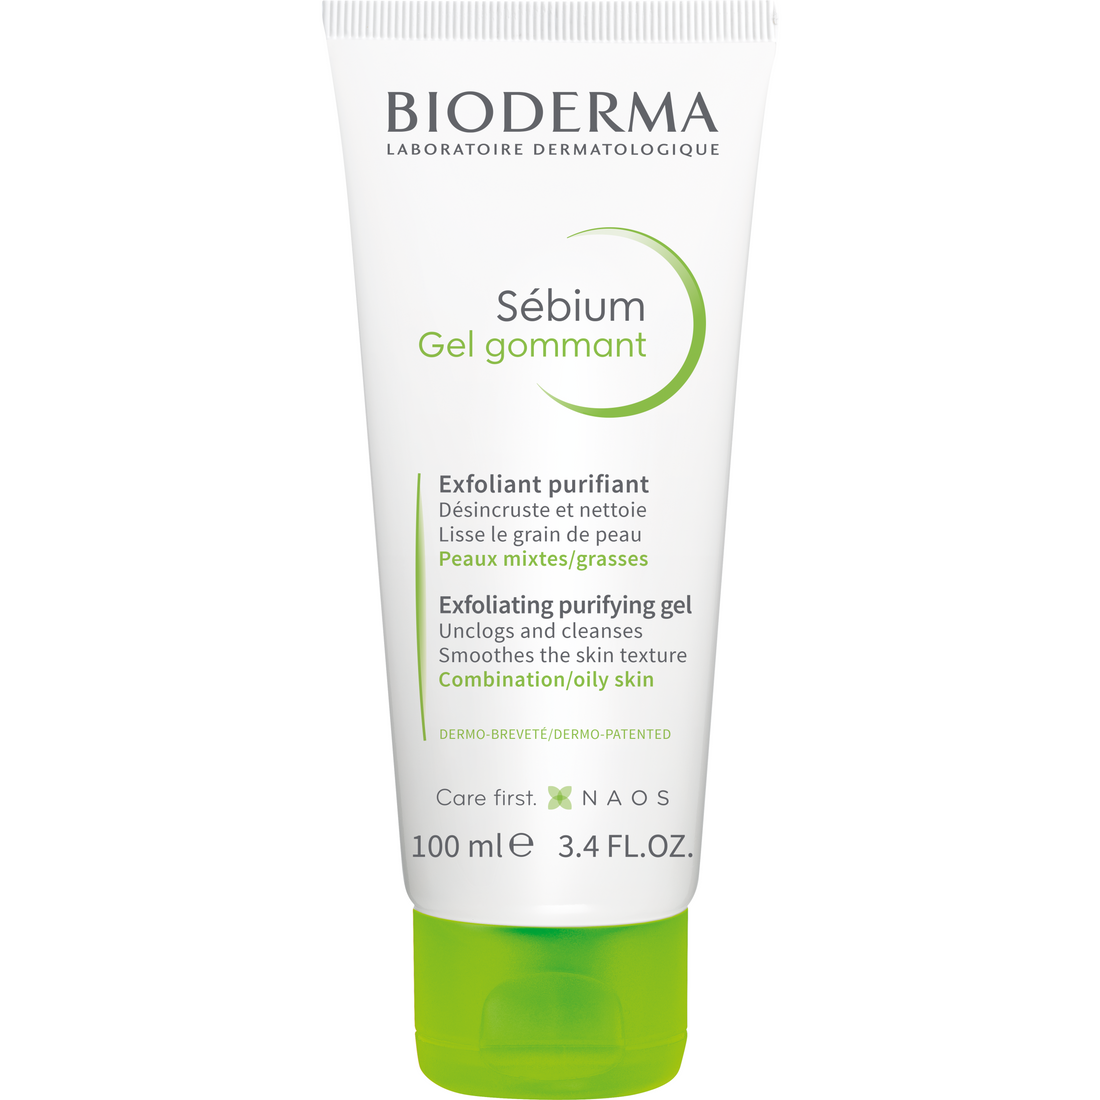 Bioderma Sebium Exfoliating Purifying Gel for Combination/Oily Skin 100ml